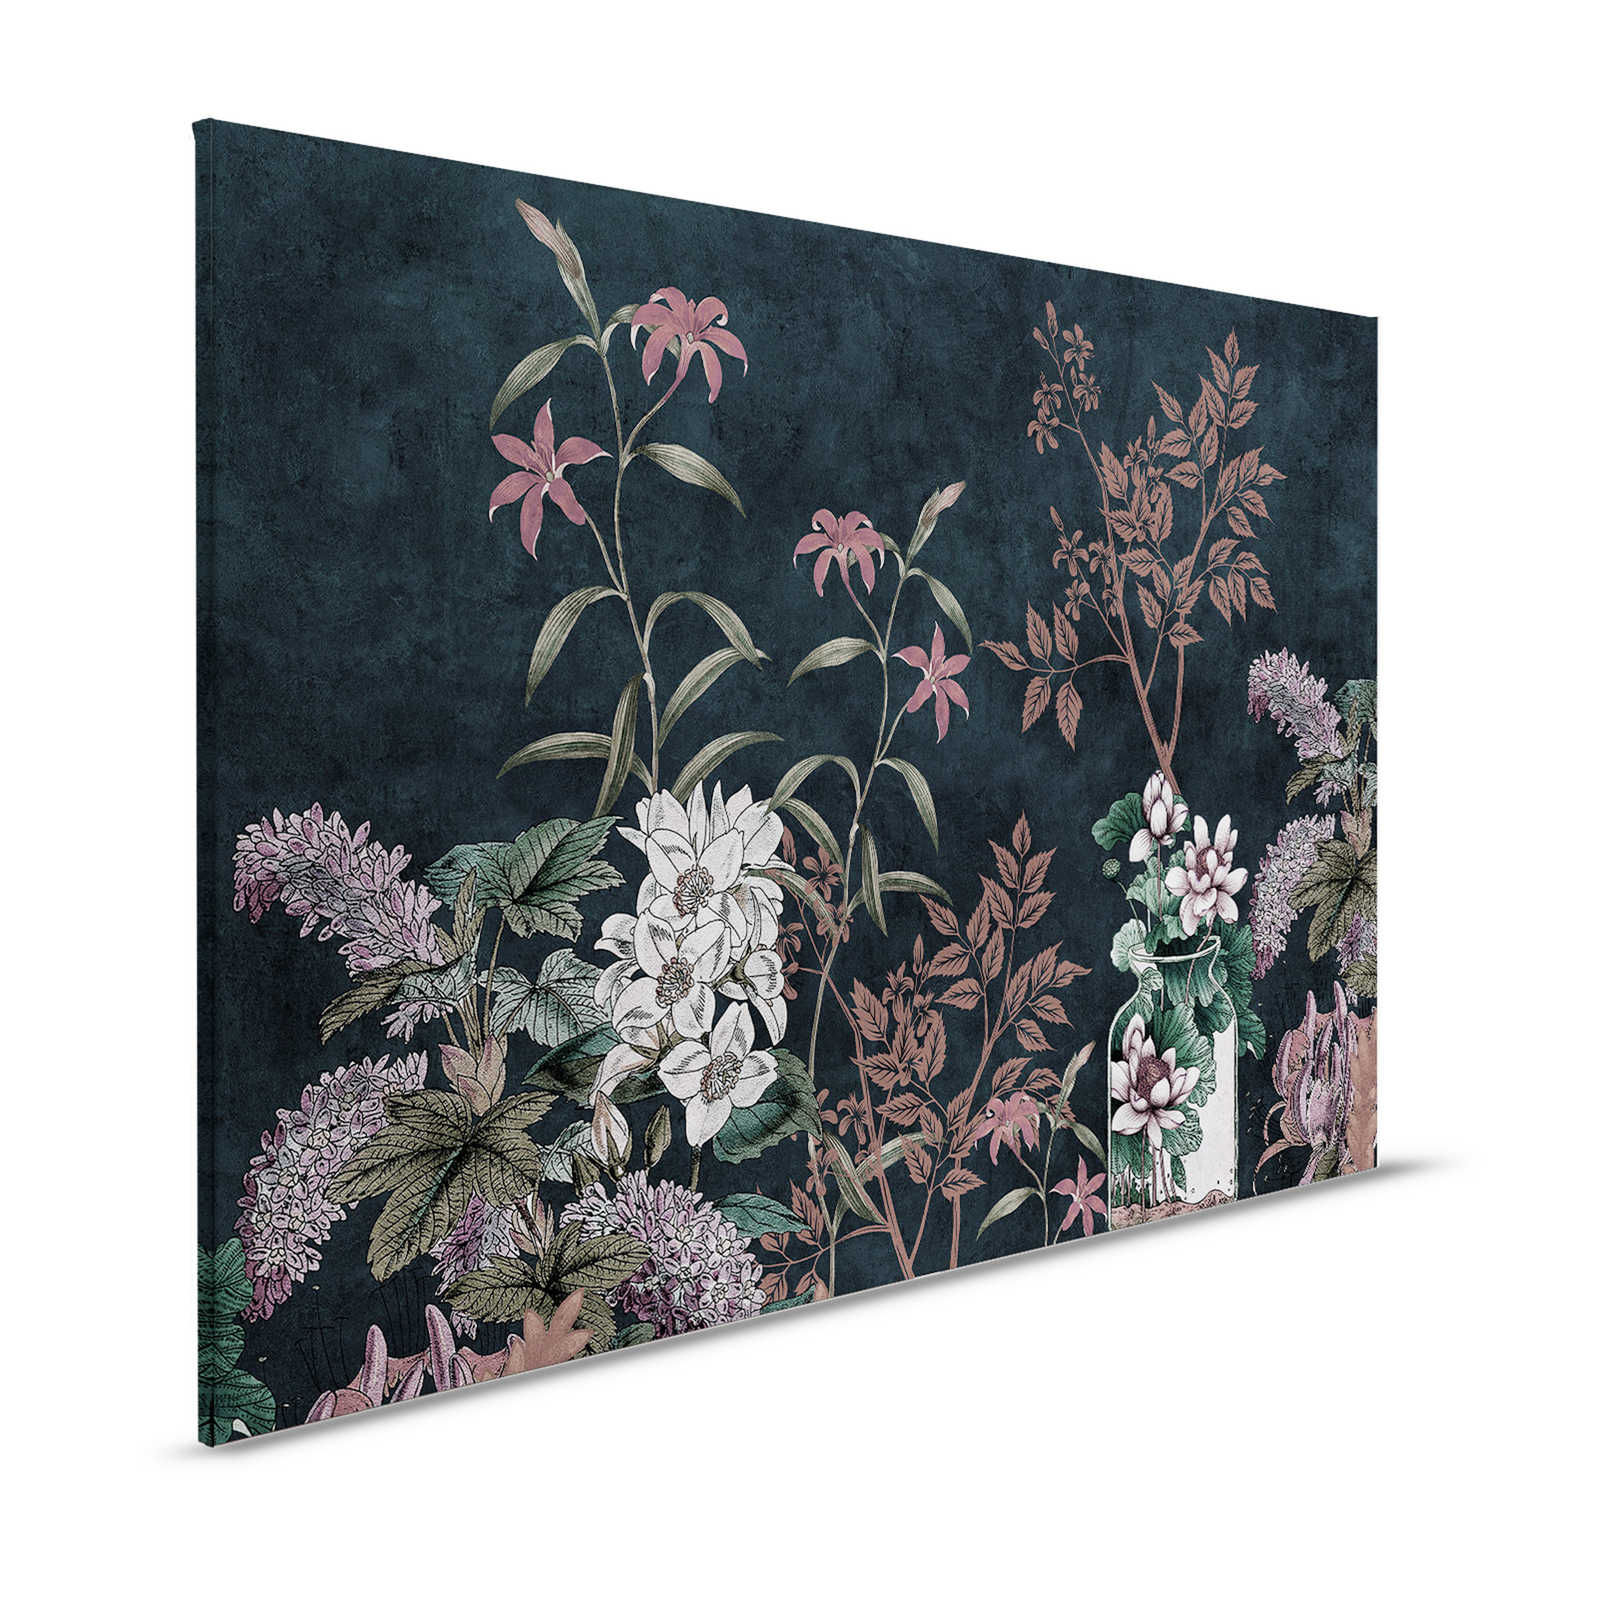 Dark Room 2 - Zwart Canvas Schilderij Botanisch Patroon Roze - 1.20 m x 0.80 m
